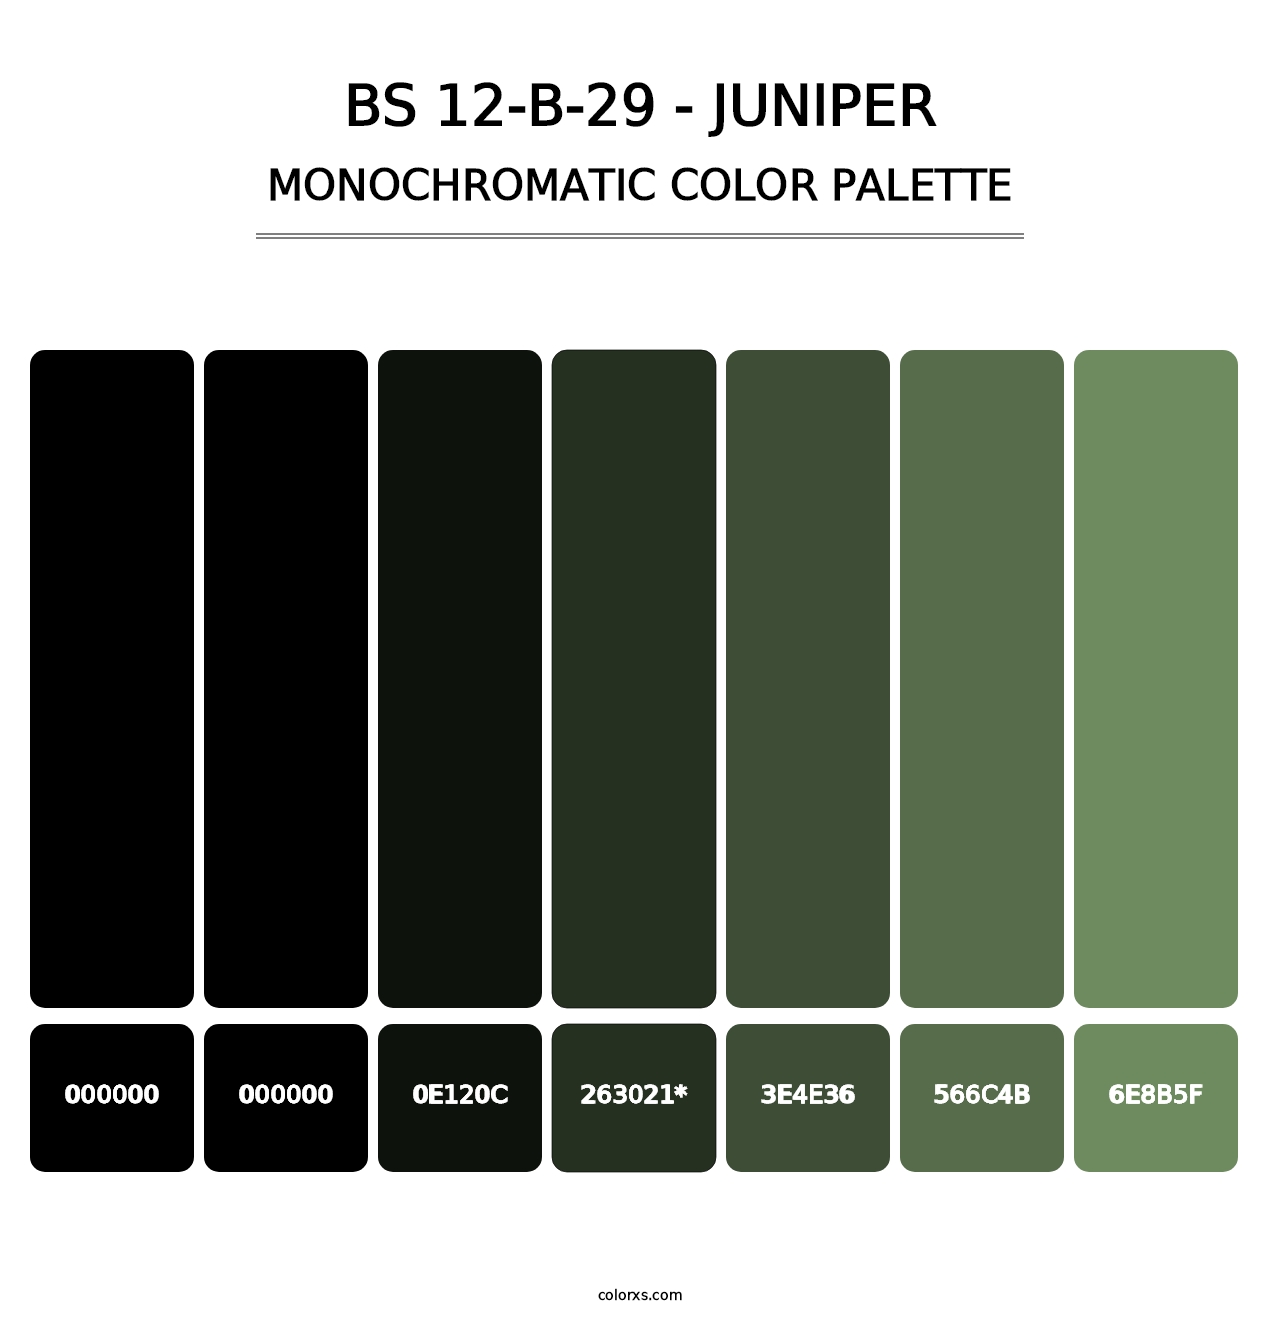 BS 12-B-29 - Juniper - Monochromatic Color Palette